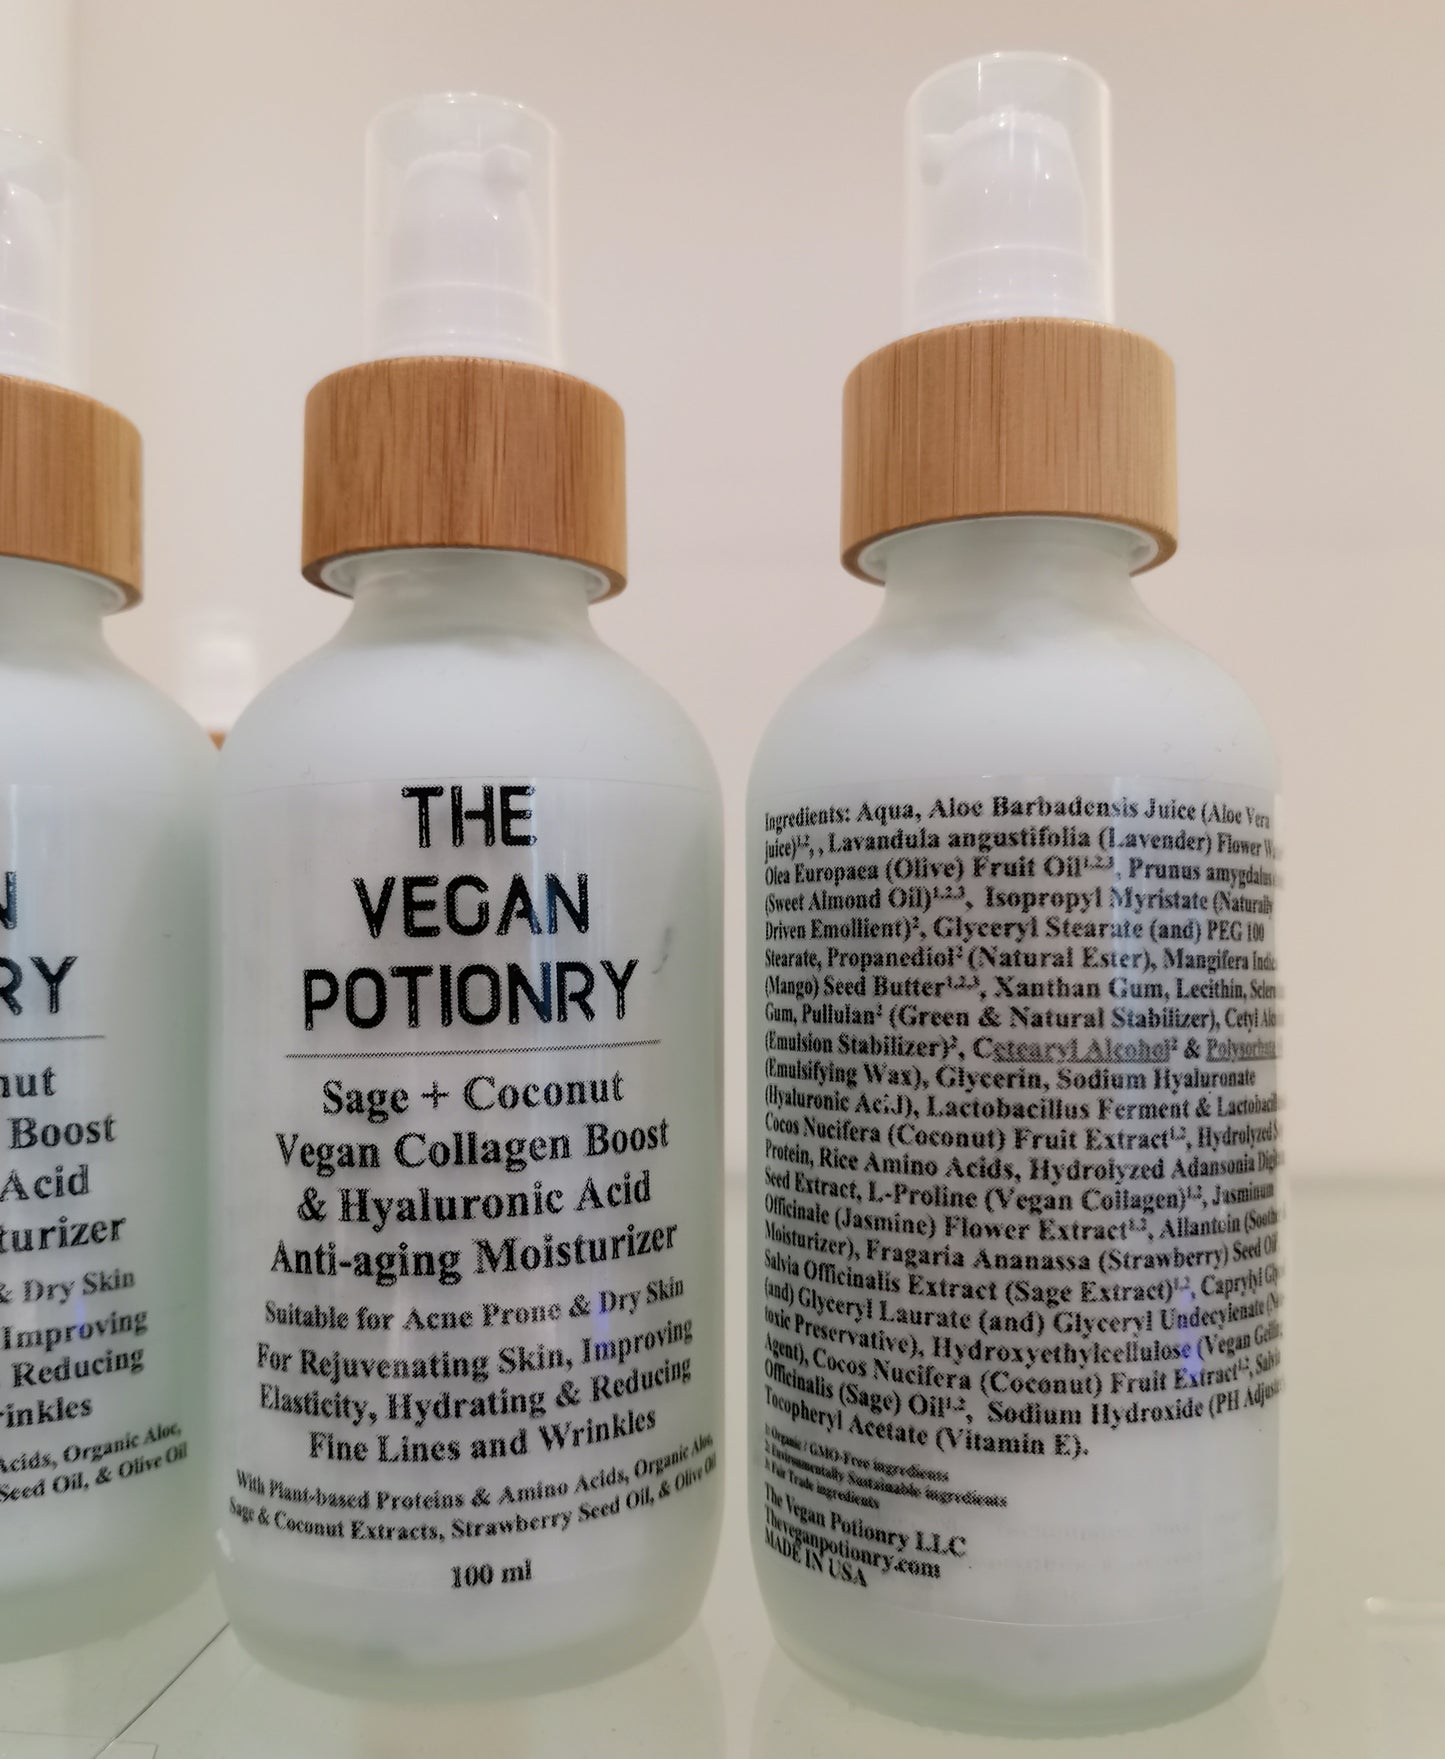 Sage + Coconut Vegan Collagen Boost  & Hyaluronic Acid  Anti-aging Moisturizer | The Vegan Potionry